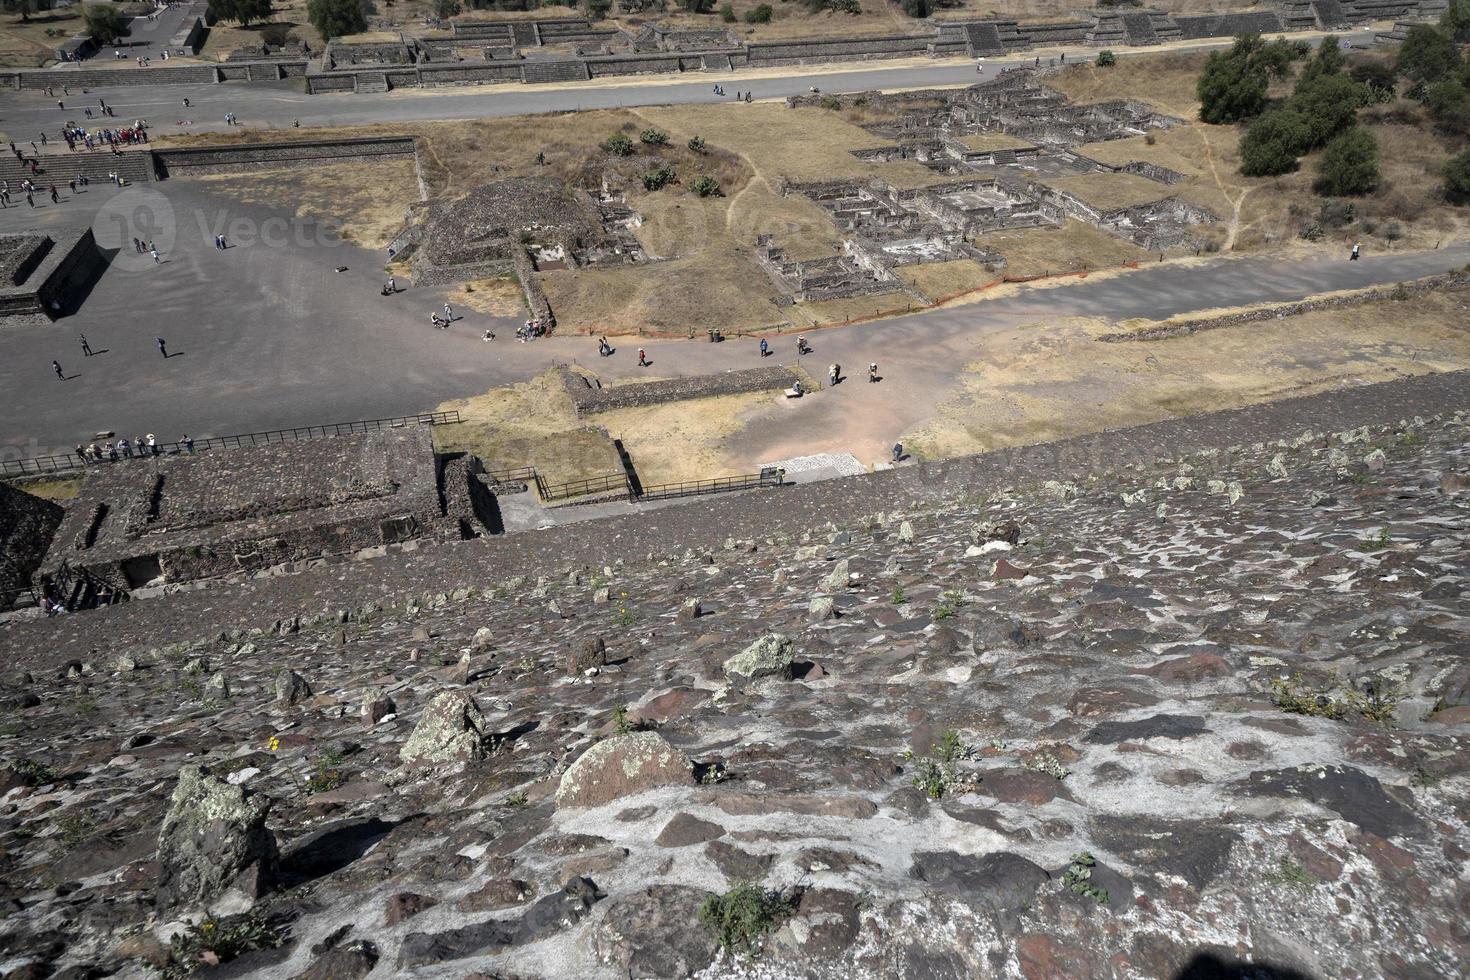 piramide de teotihuacan mexico foto